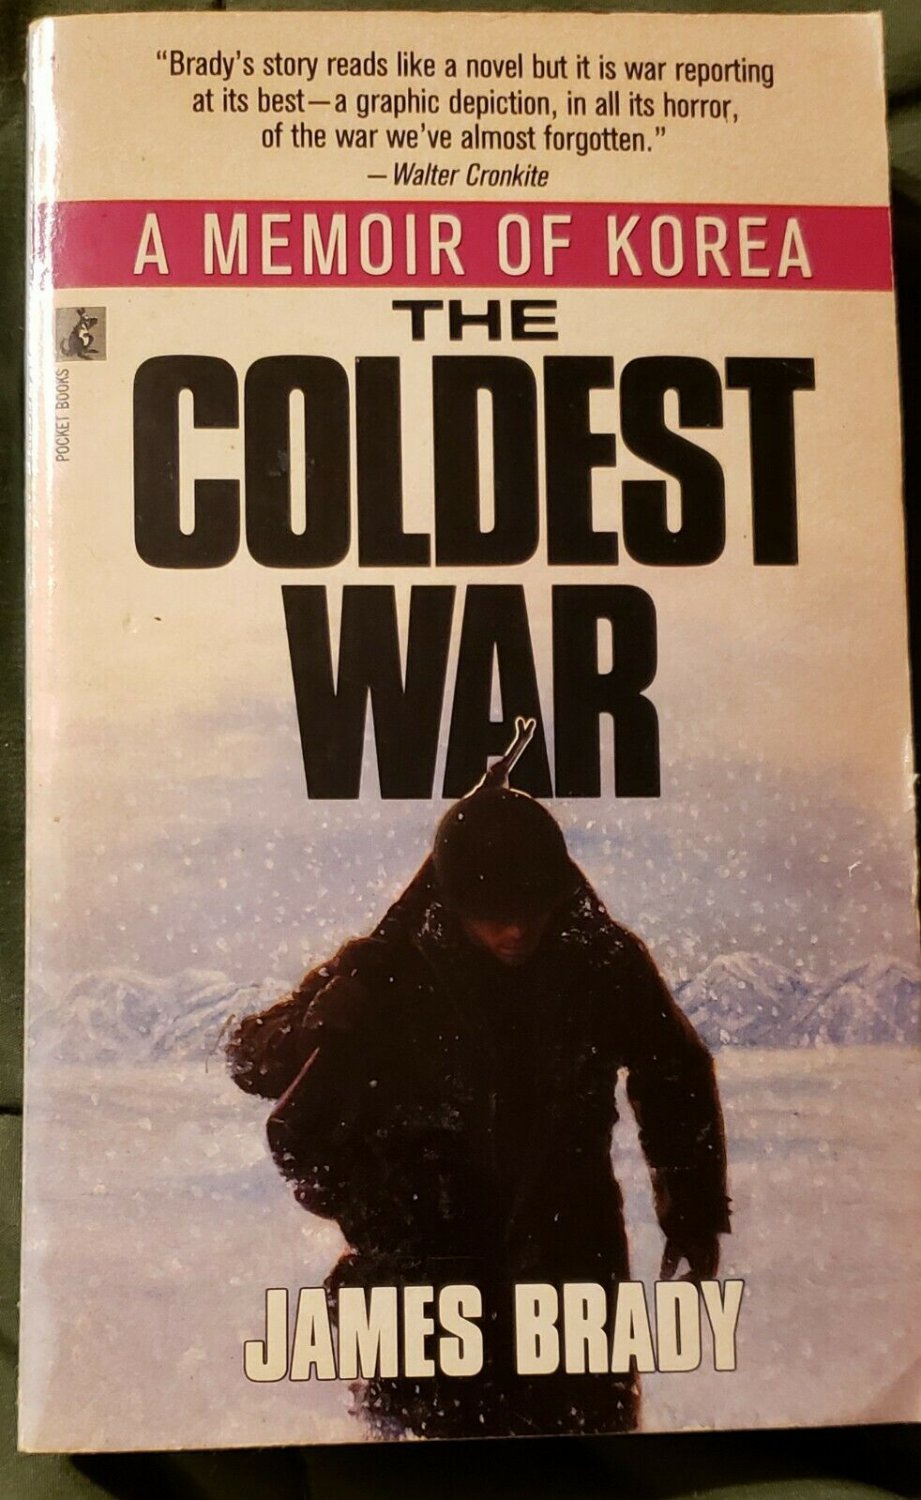 The Coldest War: A Memoir of Korea - Paperback By Brady, James - Like New